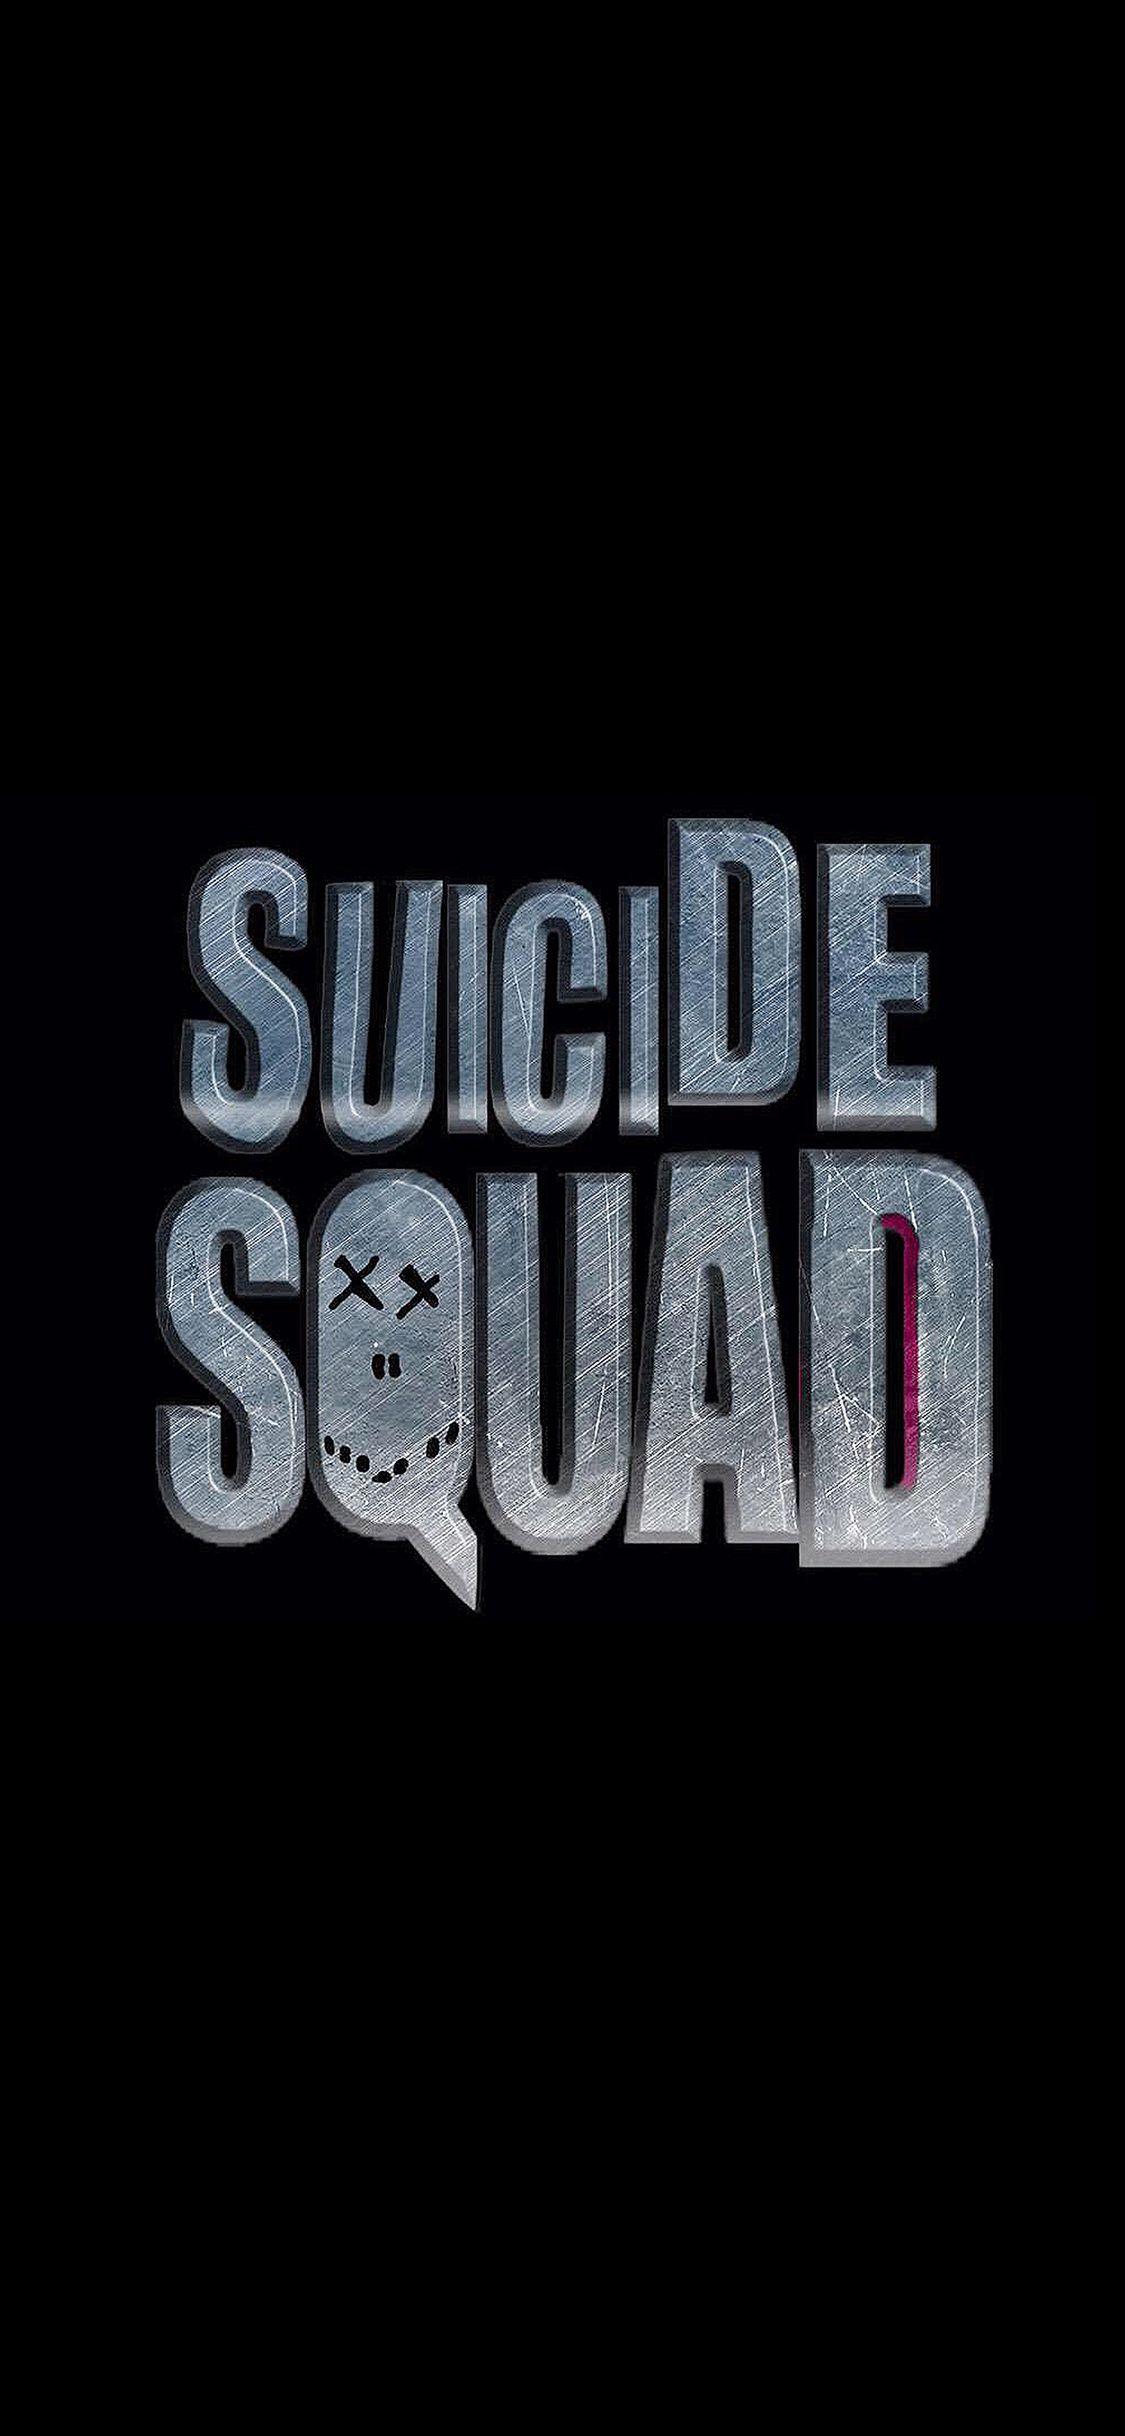 iPhone wallpaper. suicide squad logo dc art